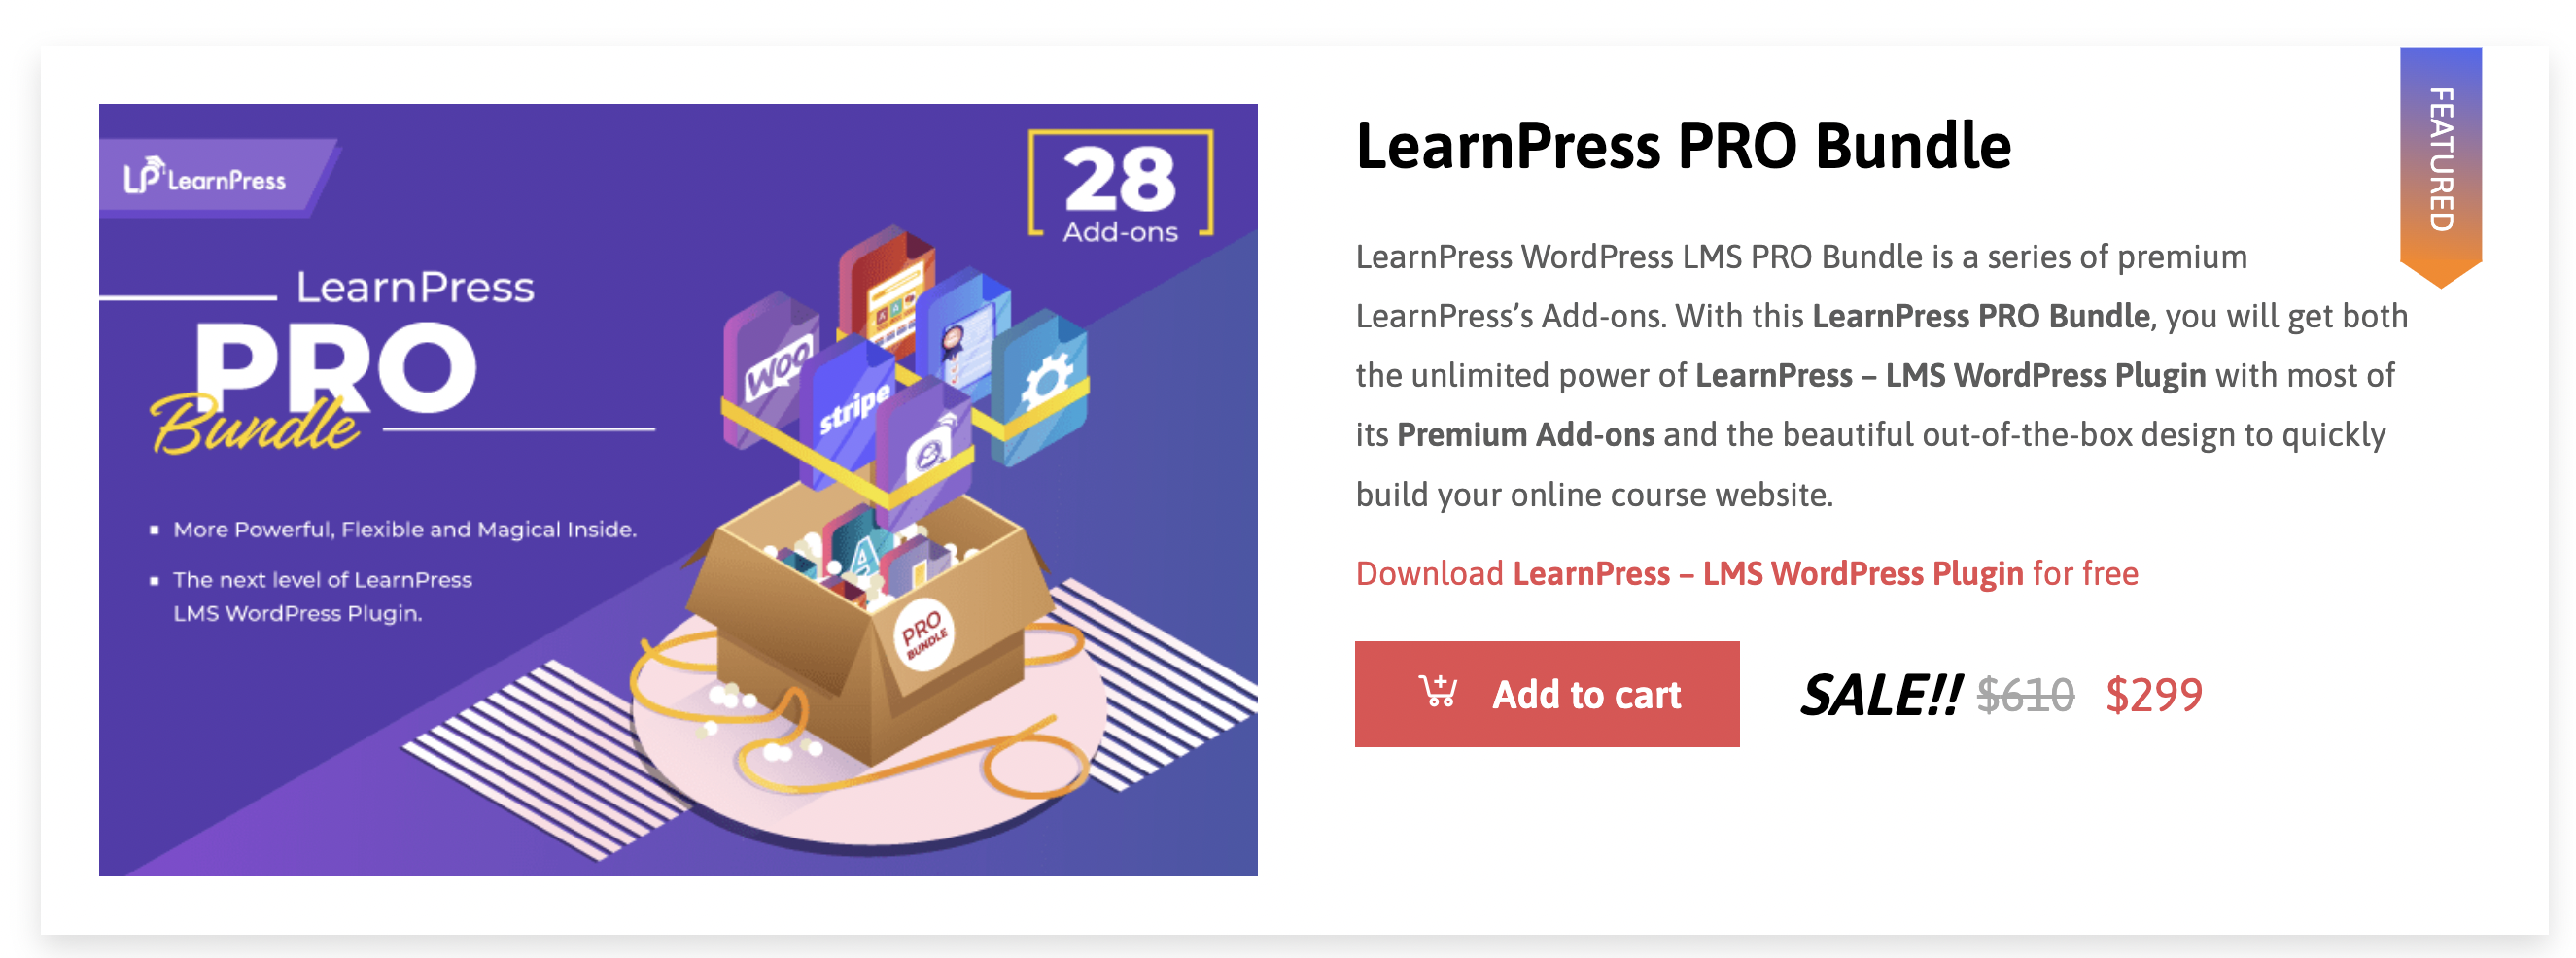 LearnPress prissättning